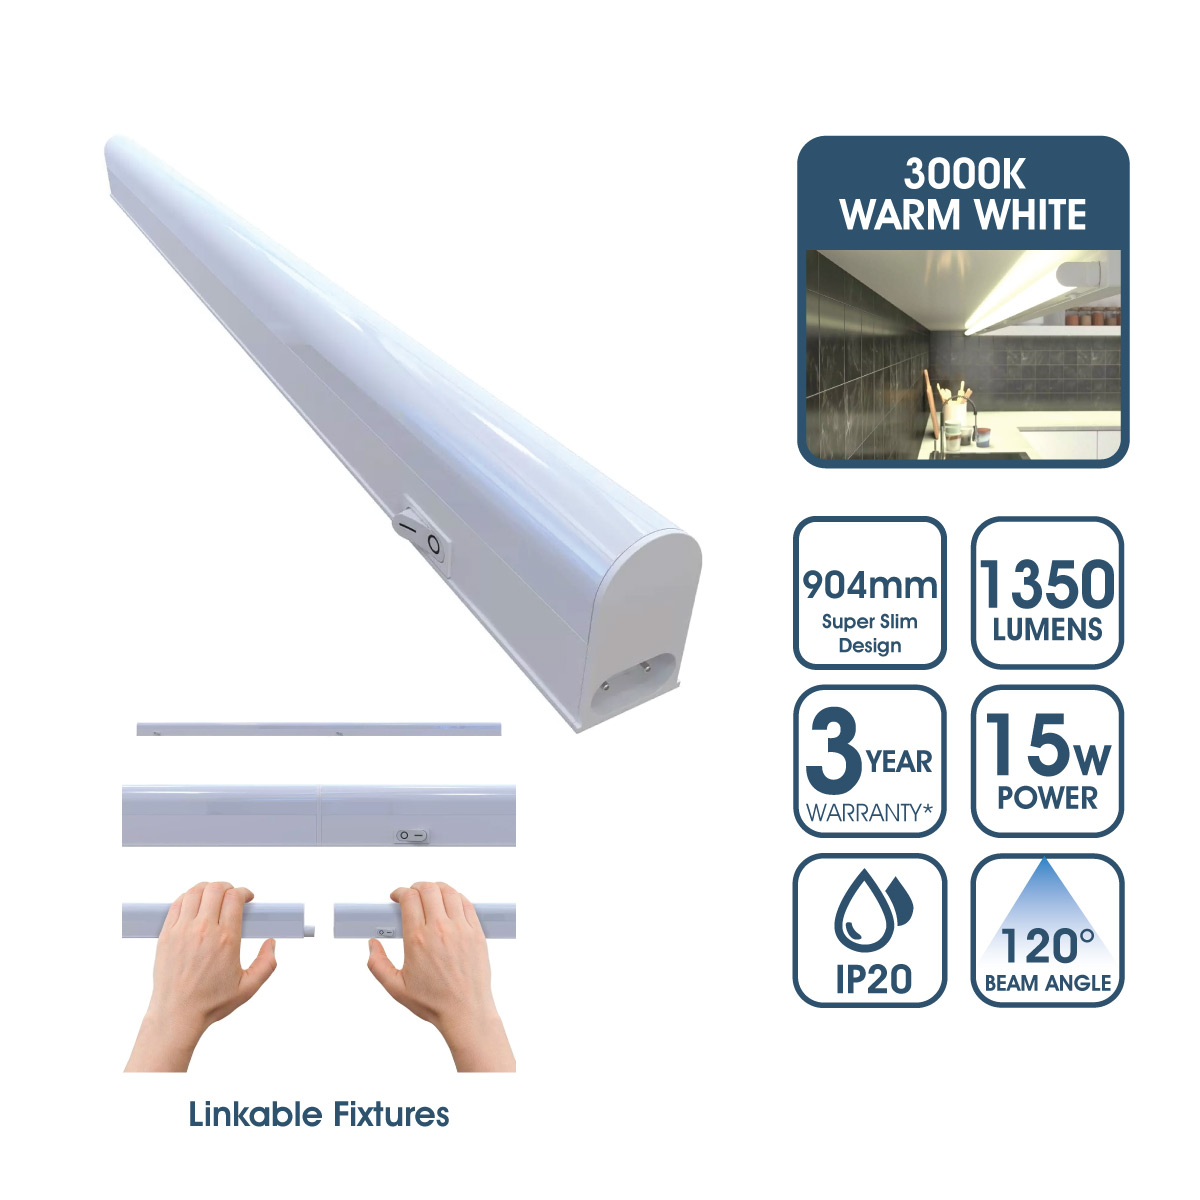 View 904mm Linkable LED Ultraslim Under Cabinet Light Fitting Warm White information